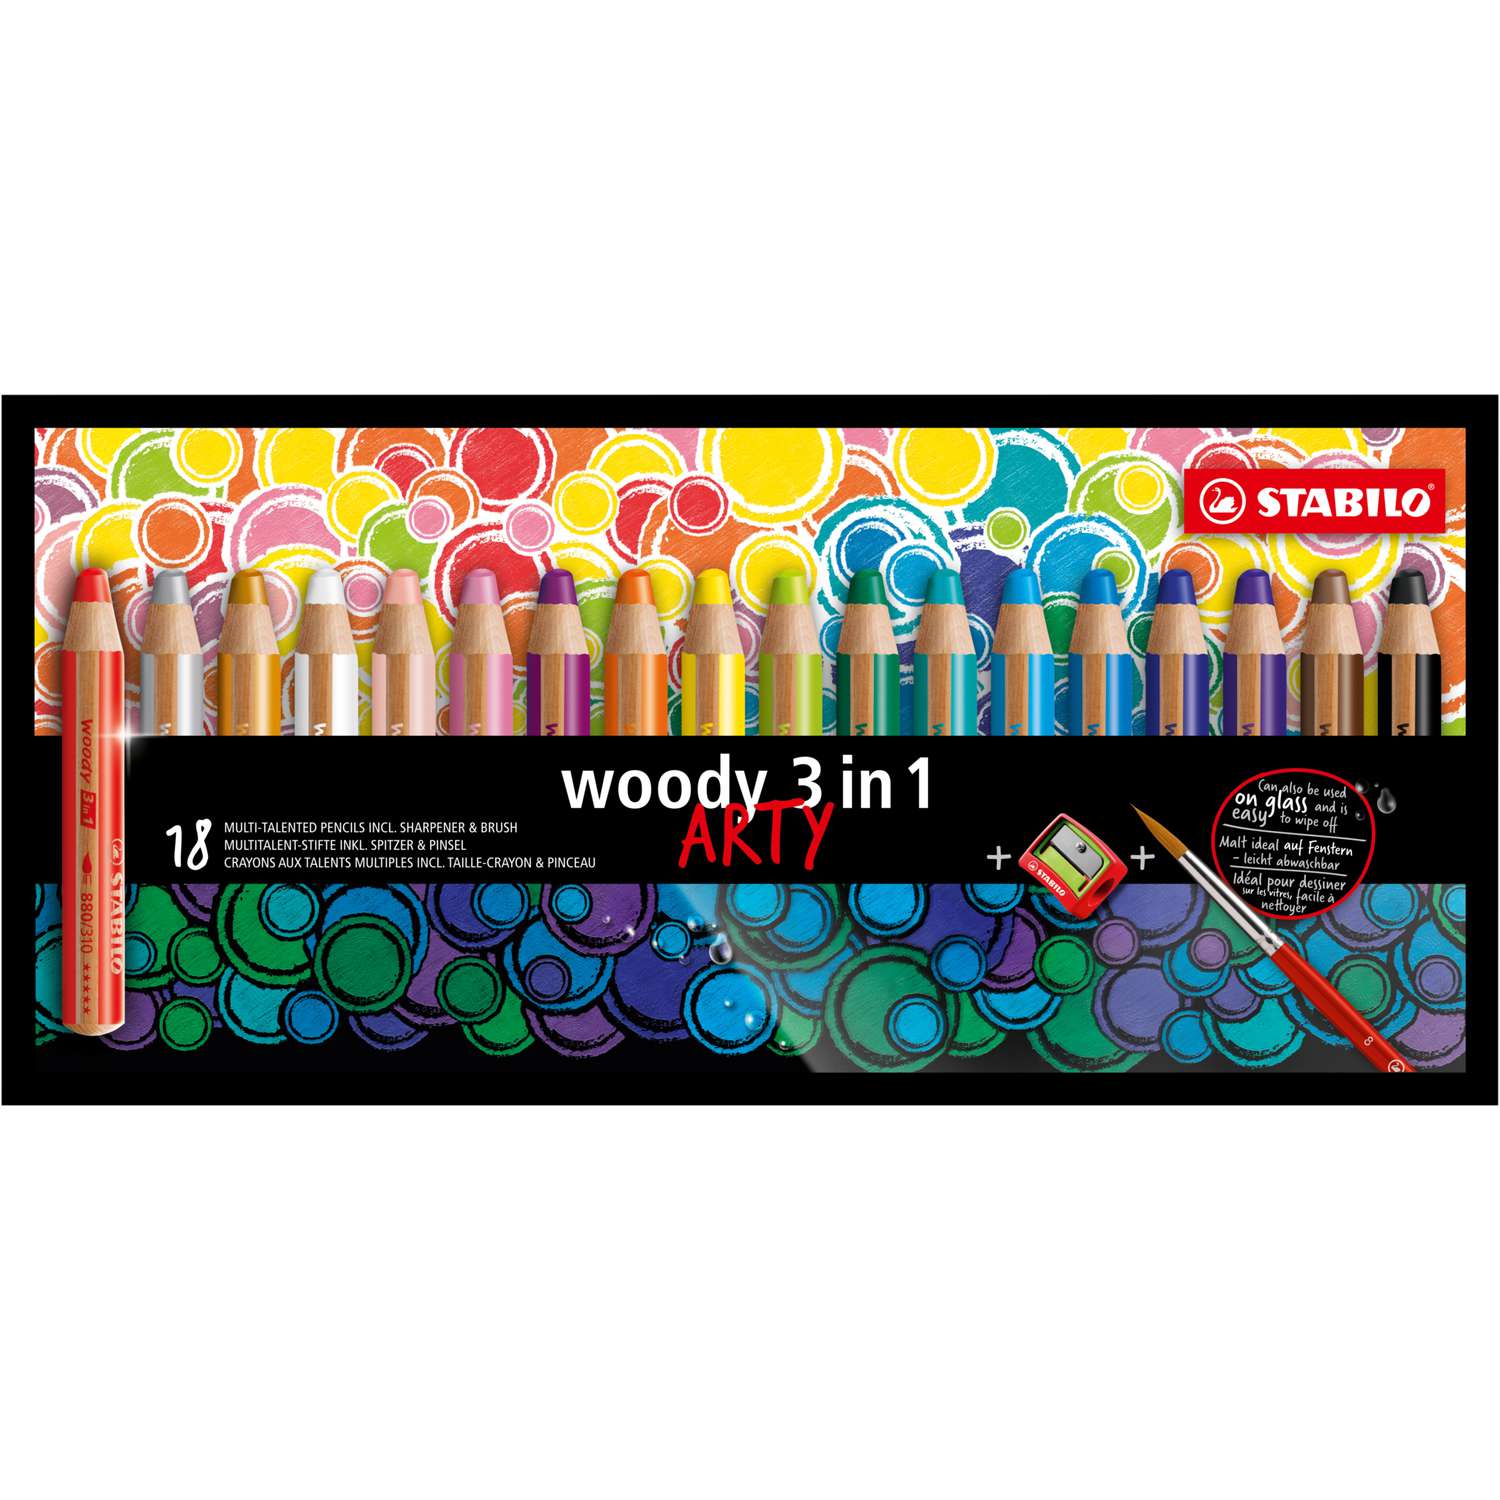 Etui de crayons woody 3 in 1 STABILO® ARTY